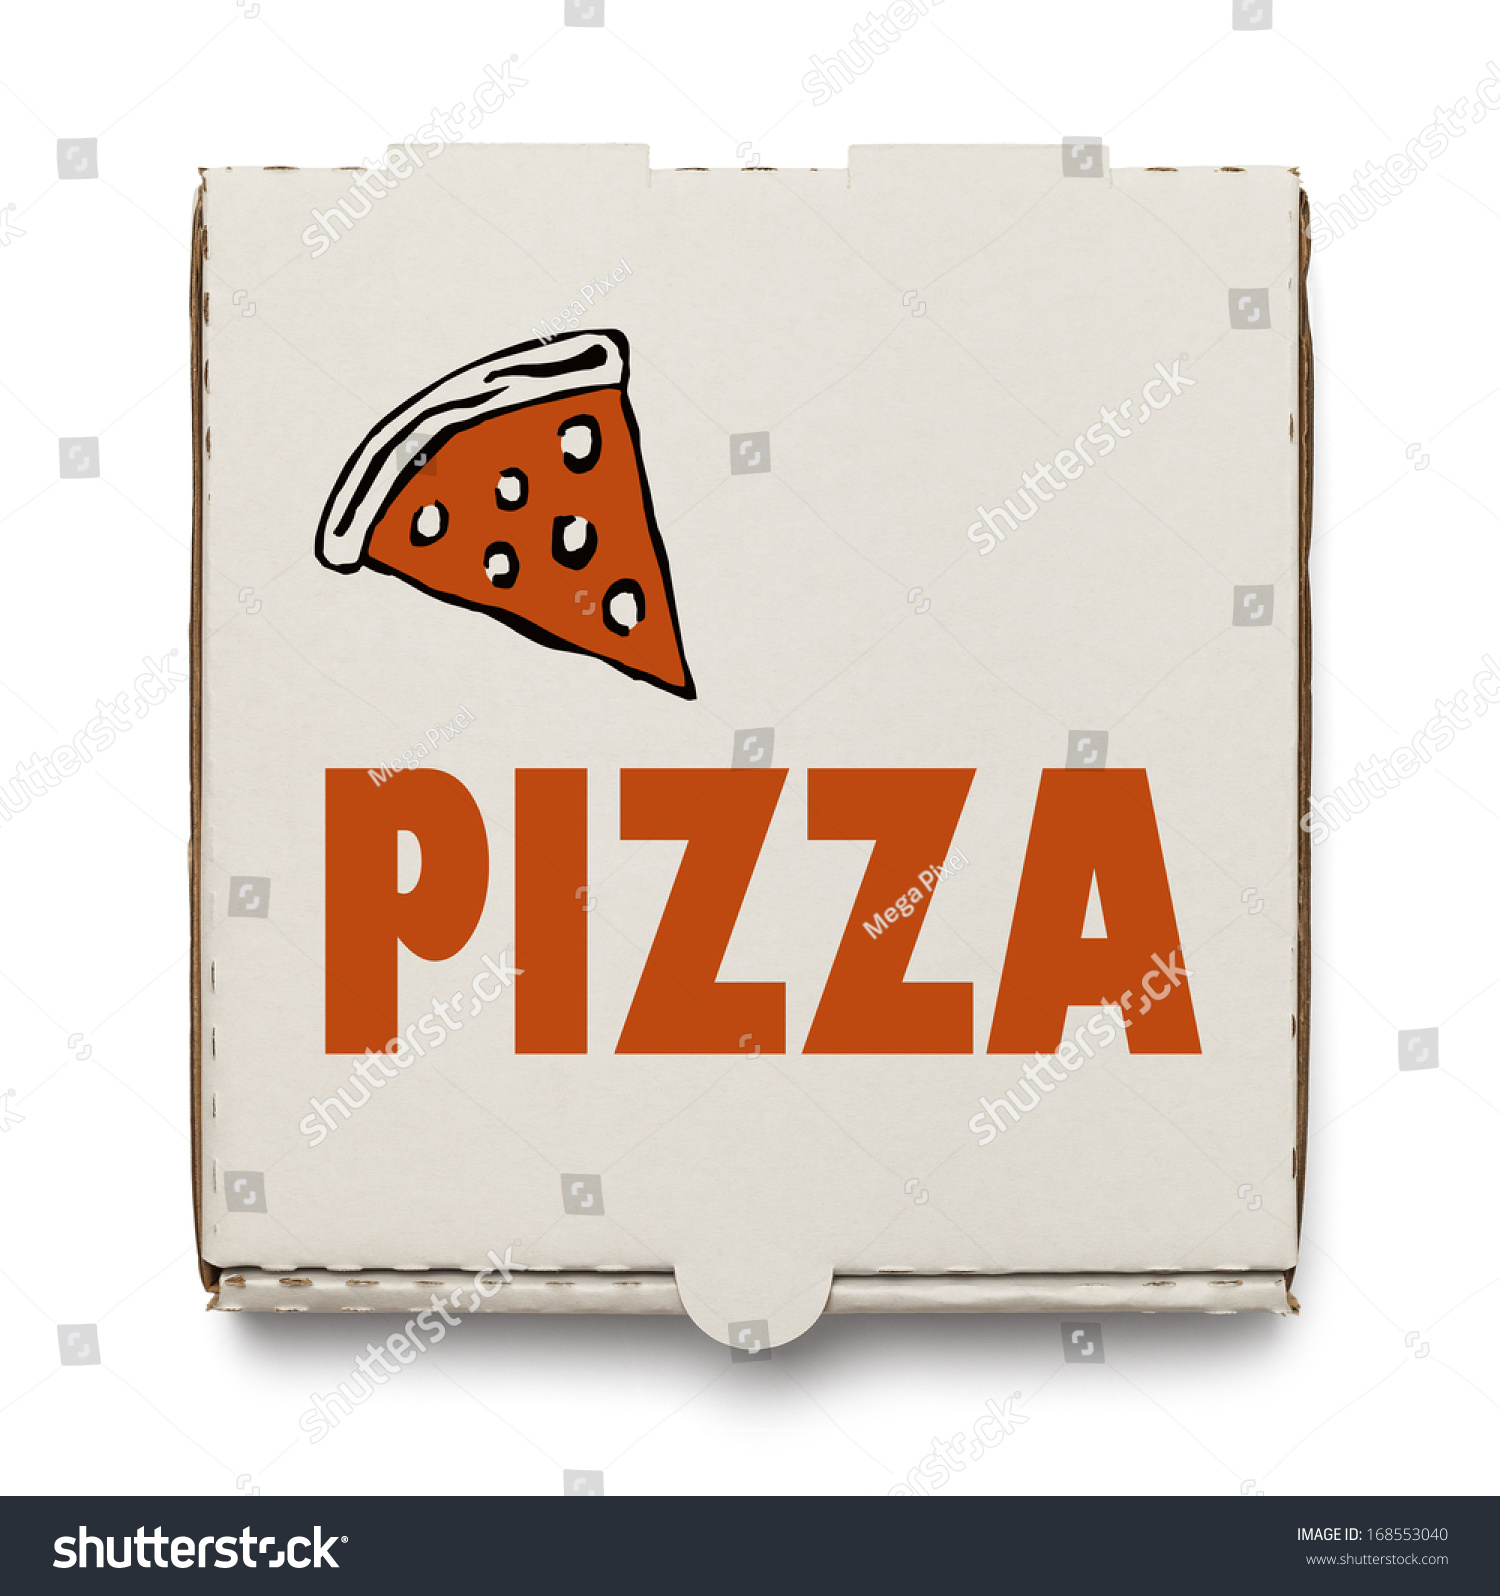 pizza box clipart free - photo #11